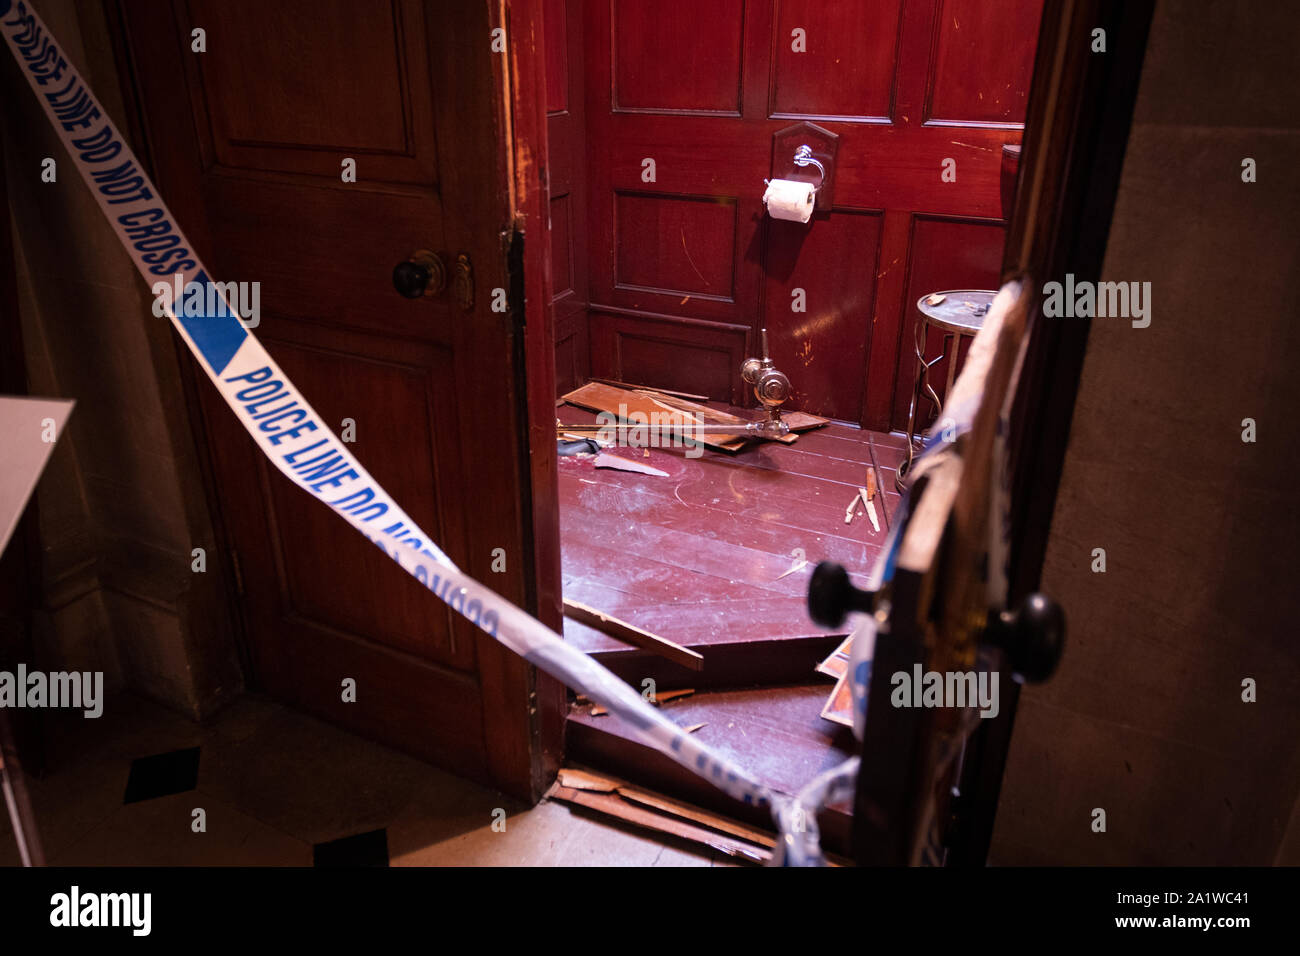 Crime scene. The broken door and floor inside Blenheim Palace where the theft of Maurizio Cattelan's 18 carat Golden toilet art exhibition took place. Stock Photo